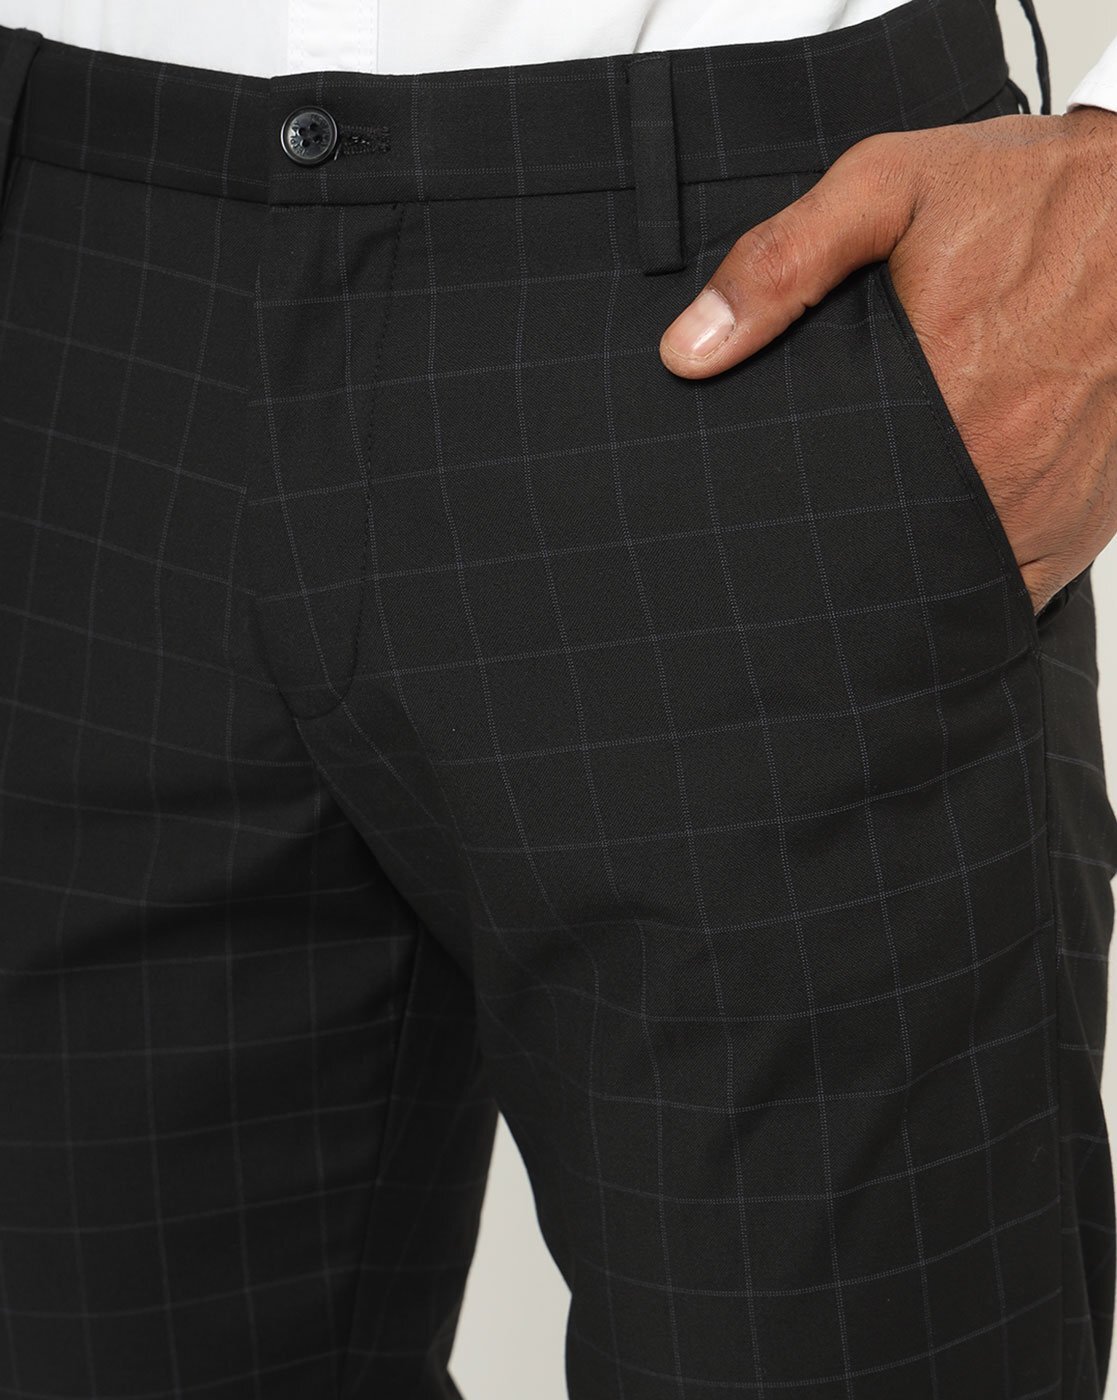 Plaid Golf Pants In Mens Pants for sale  eBay